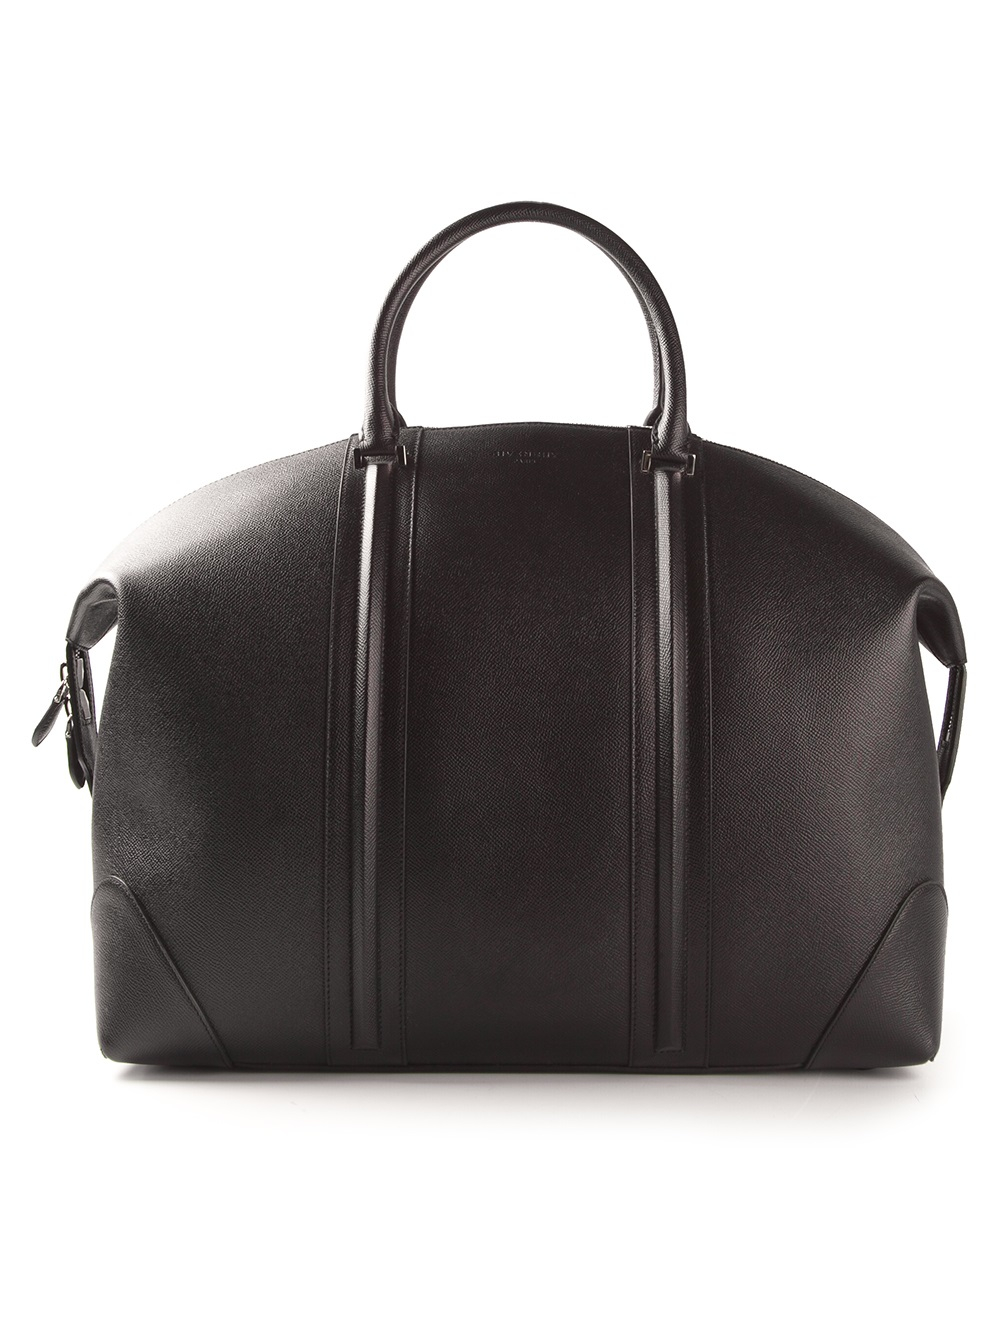 Givenchy Luggage Bag in Black for Men 